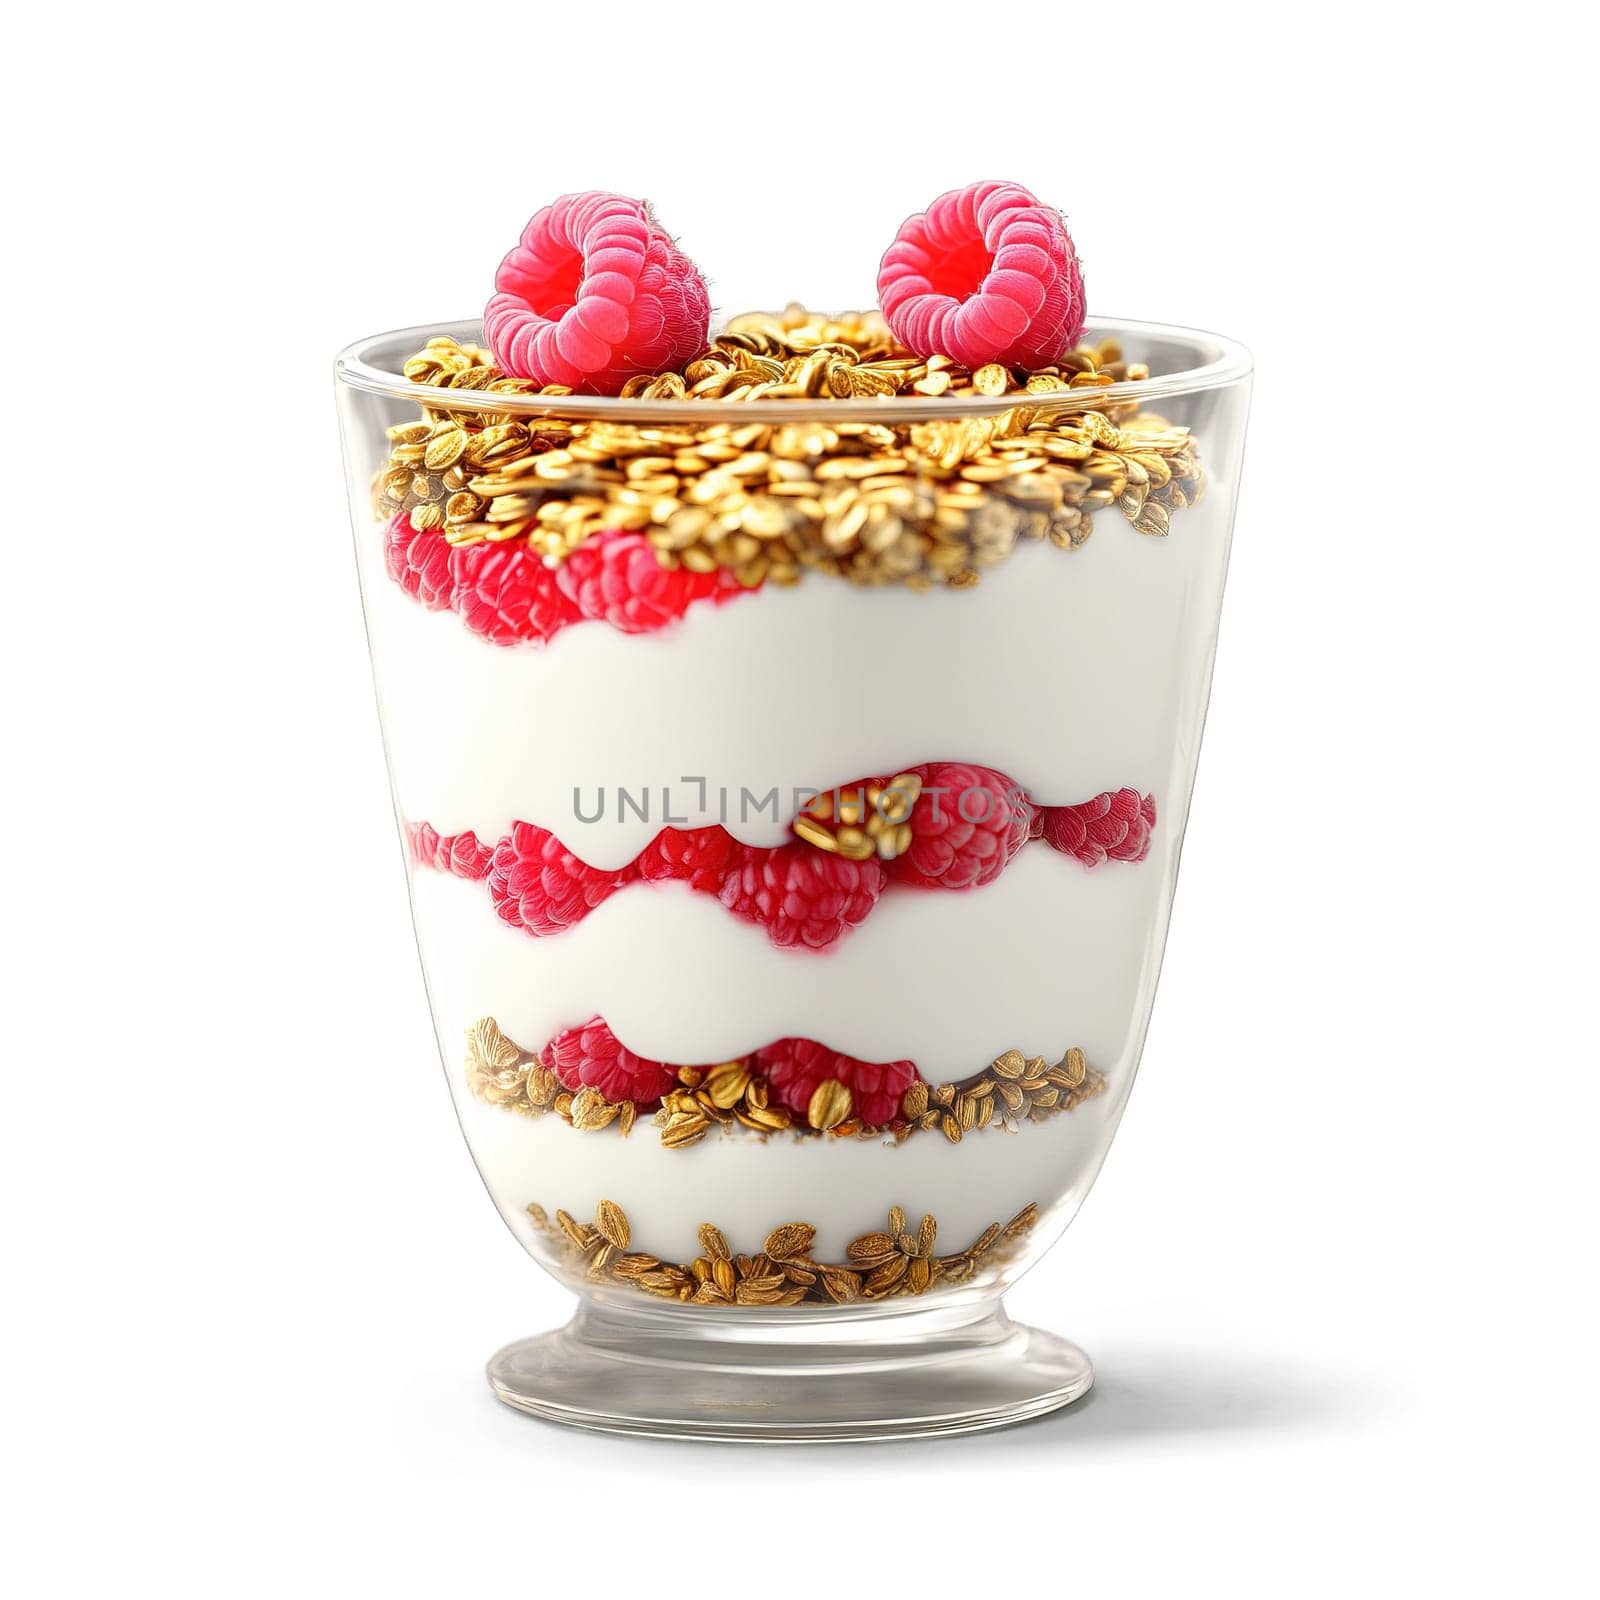 Breakfast yogurt parfait with layers of Greek yogurt granola and fresh raspberries by panophotograph